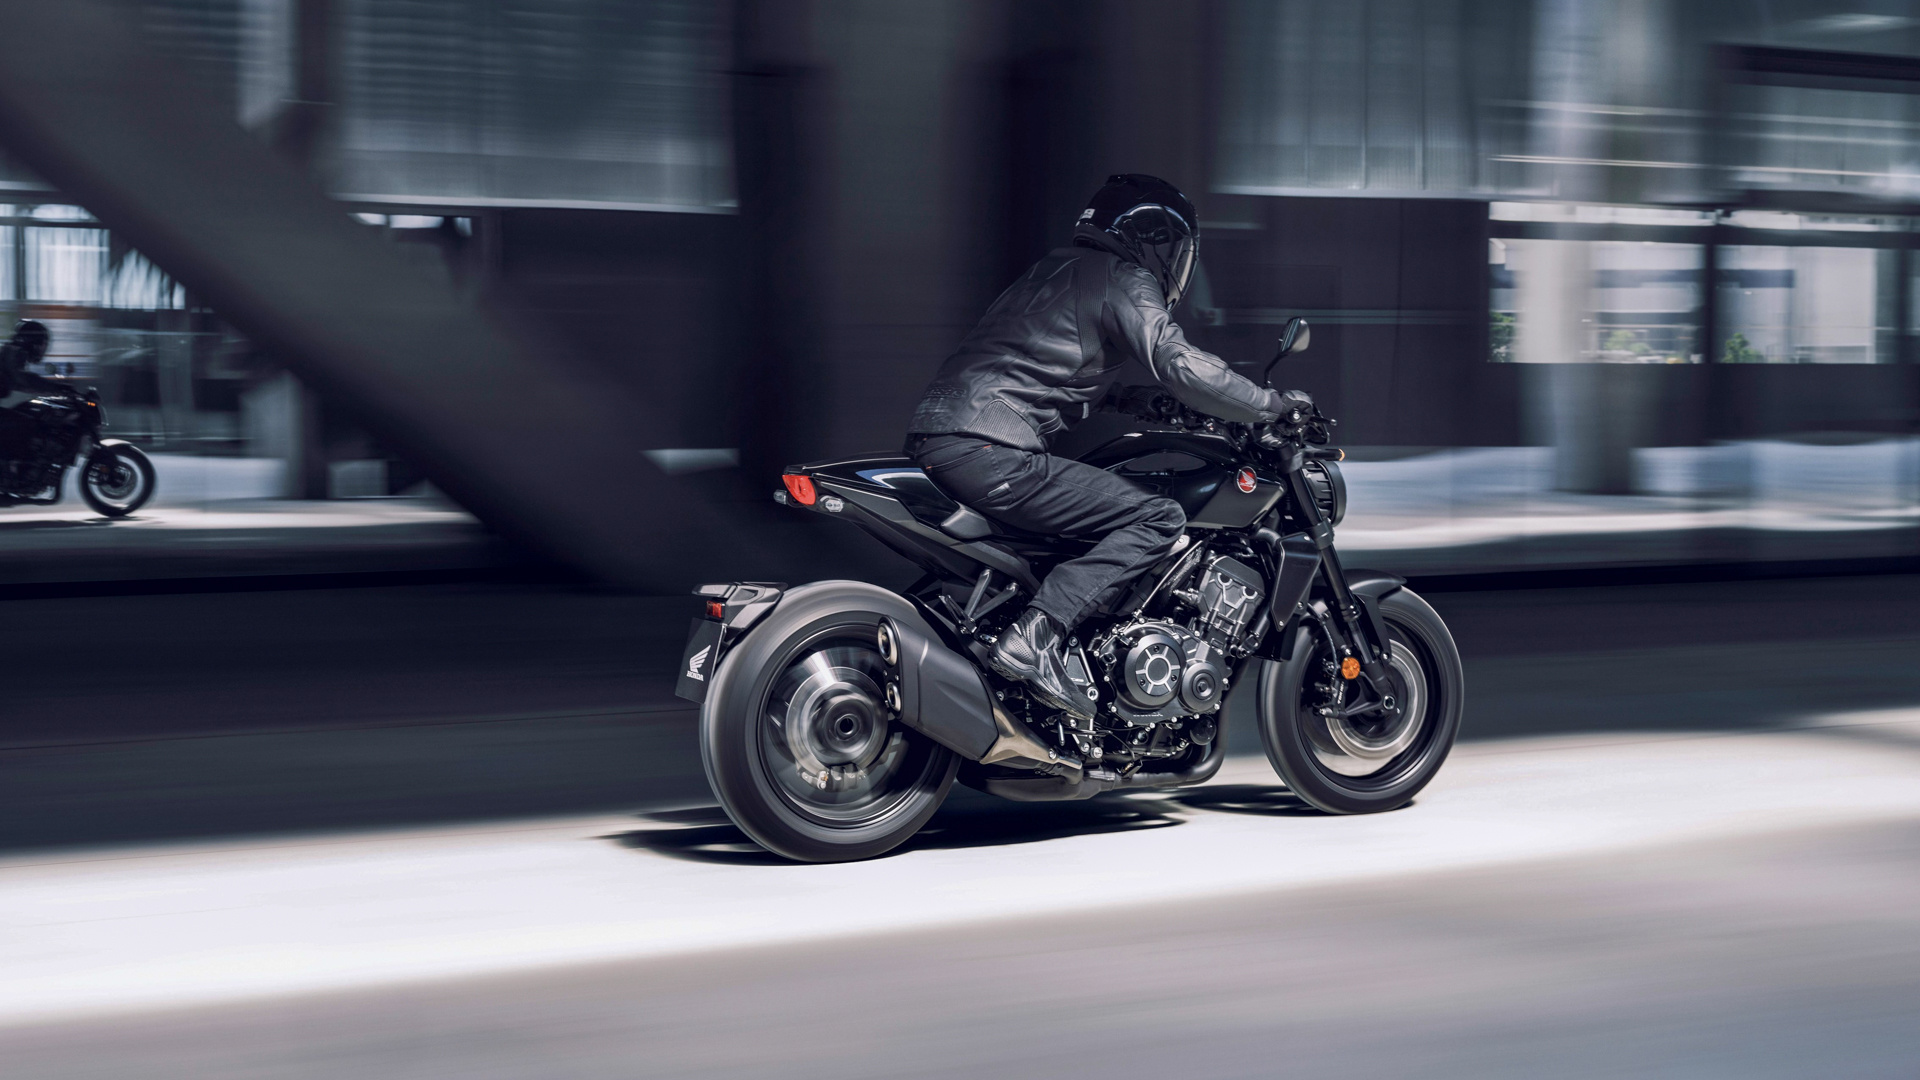 Honda CB1000R, Compact and sleek design, High-performance motorbike, Cutting-edge technology, 1920x1080 Full HD Desktop